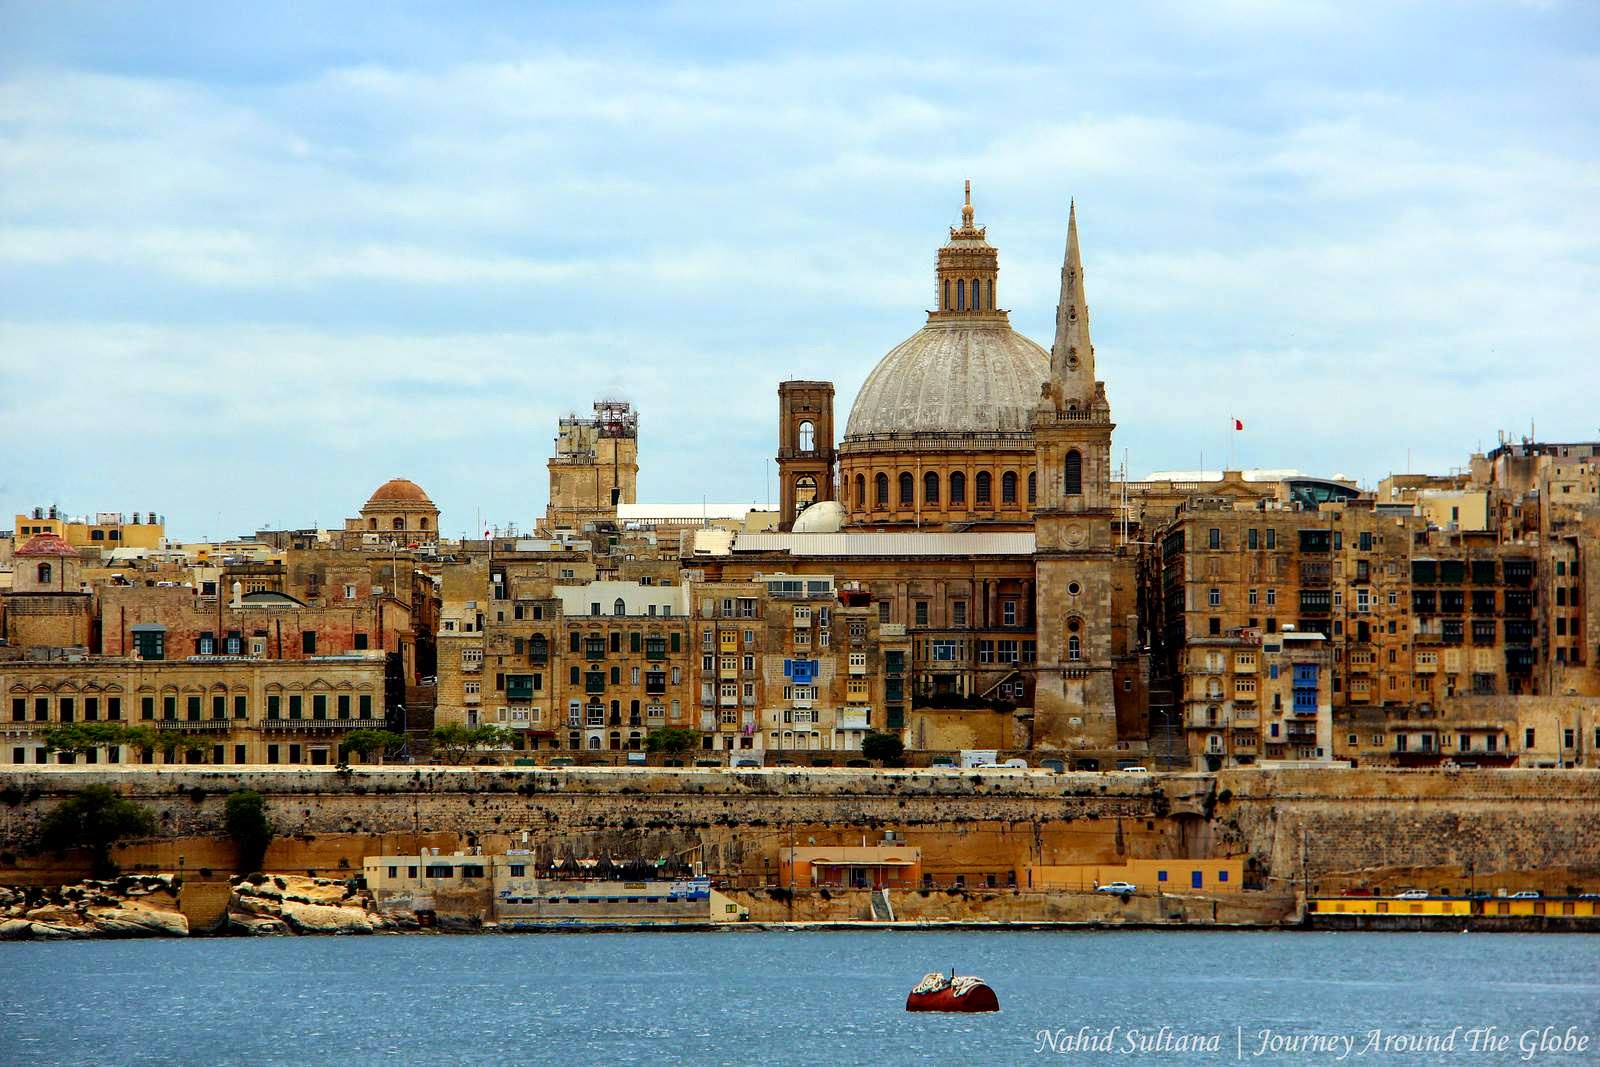 Malta - Valletta, the medieval capital of Malta